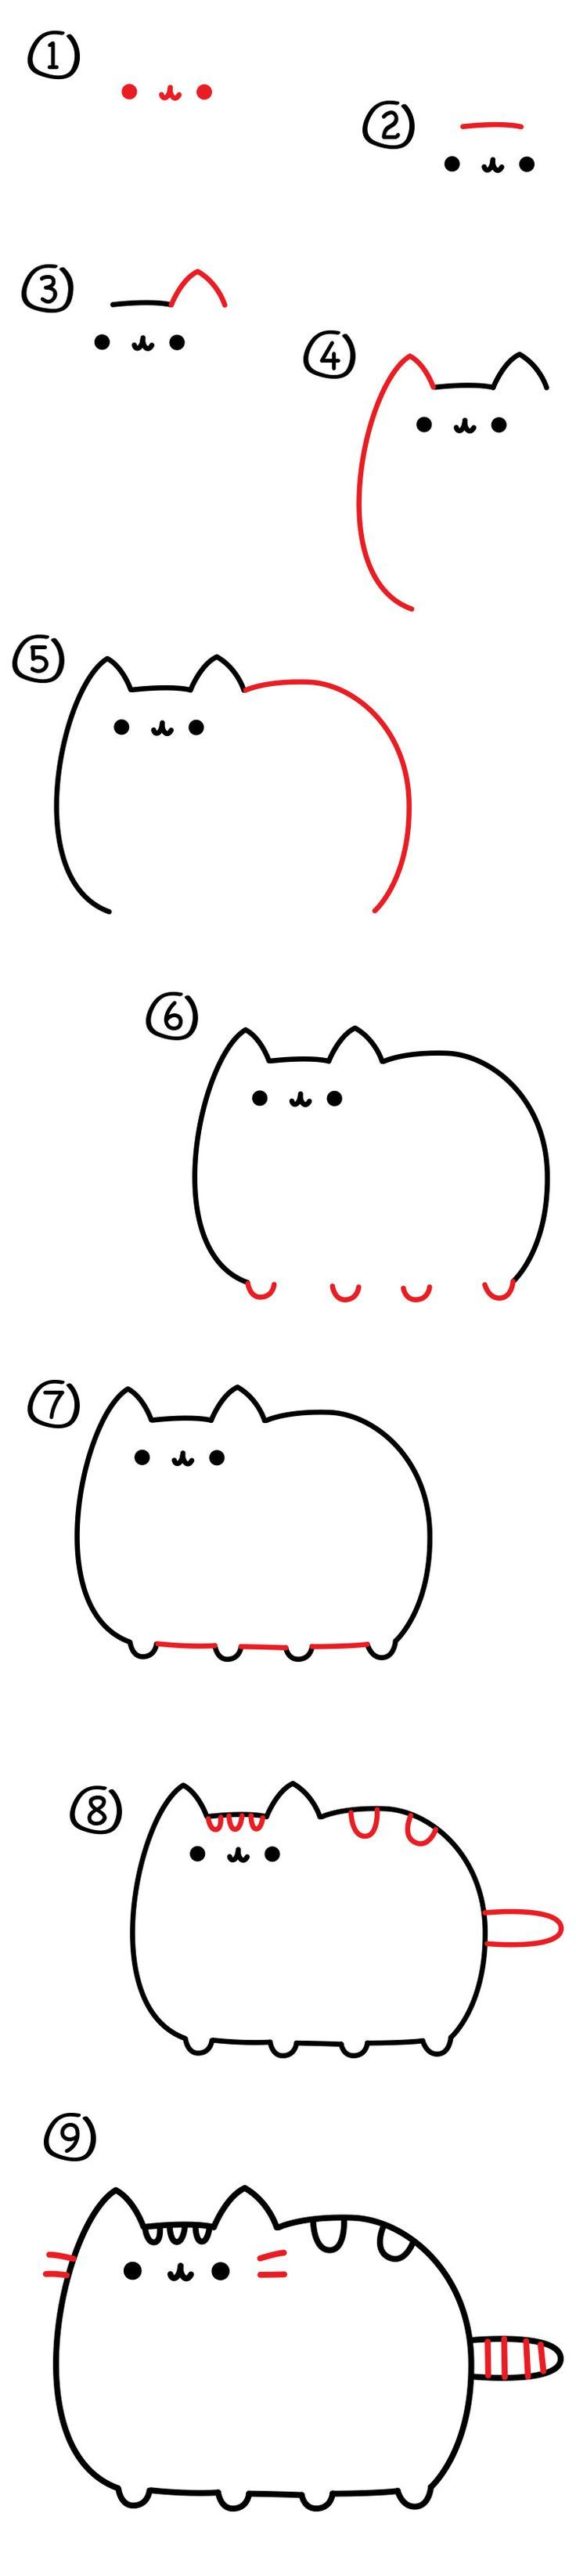 How To Draw The Pusheen Cat - Art For Kids Hub -